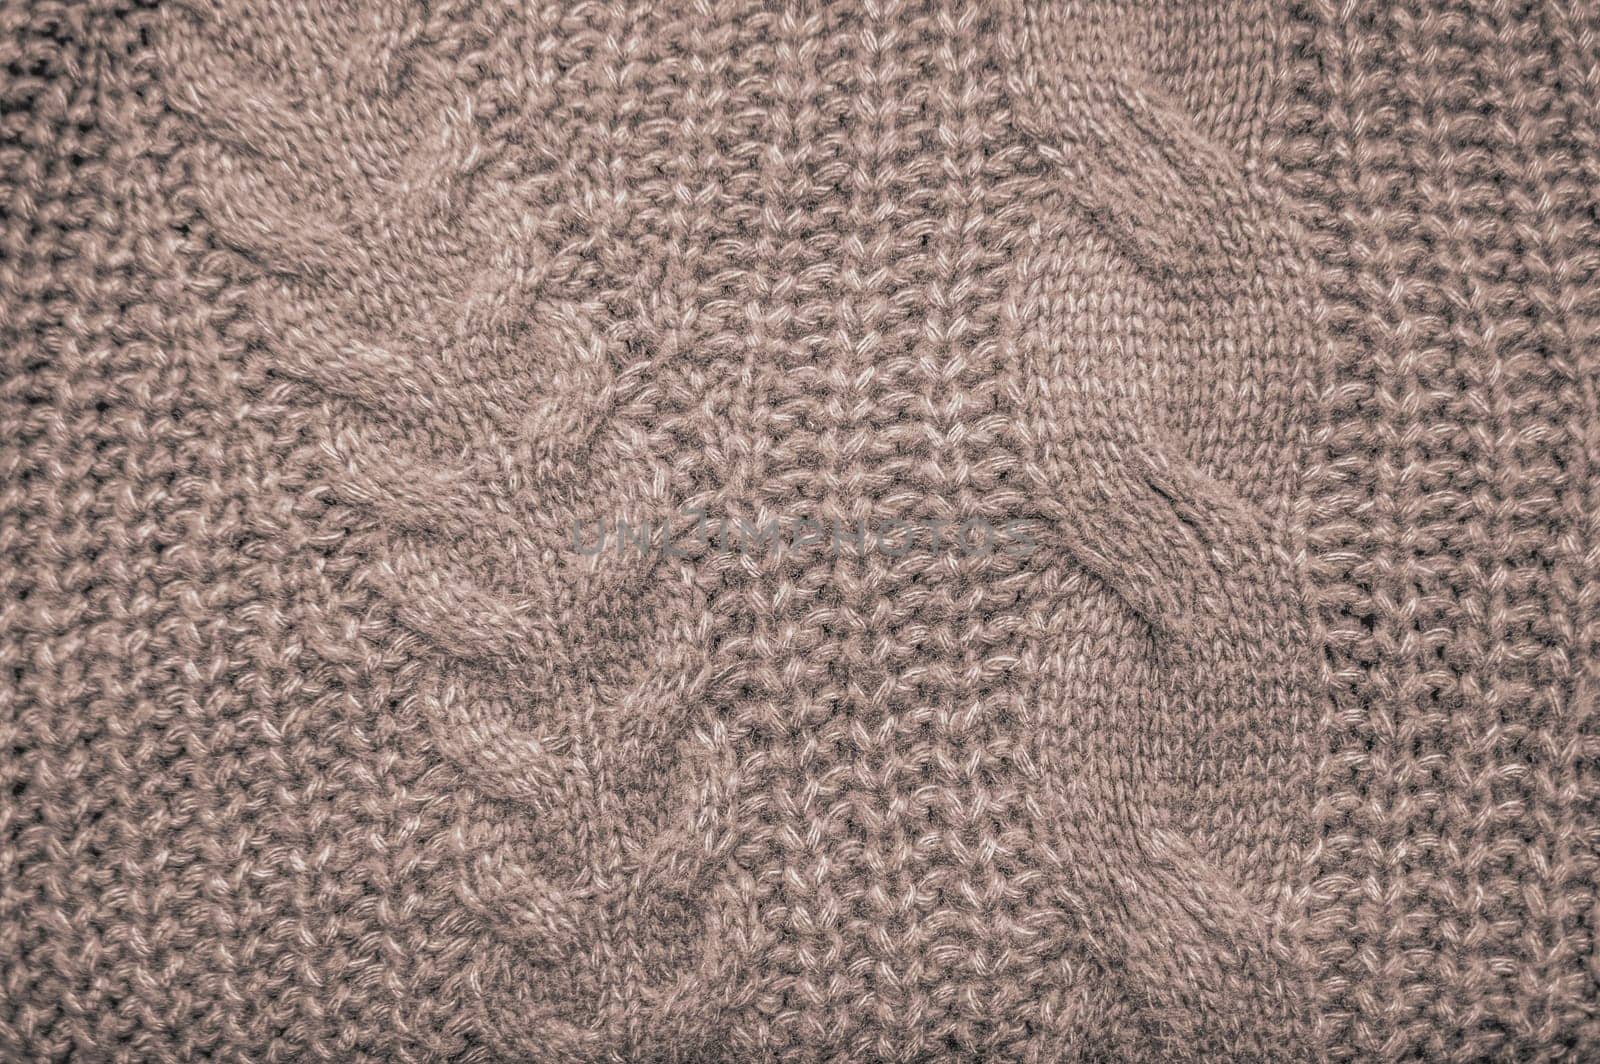 Knitting Texture. Abstract Woven Textile. Knitwear Christmas Background. Soft Knitted Texture. Fiber Thread. Scandinavian Holiday Jumper. Woolen Cloth Wallpaper. Structure Knitted Texture.